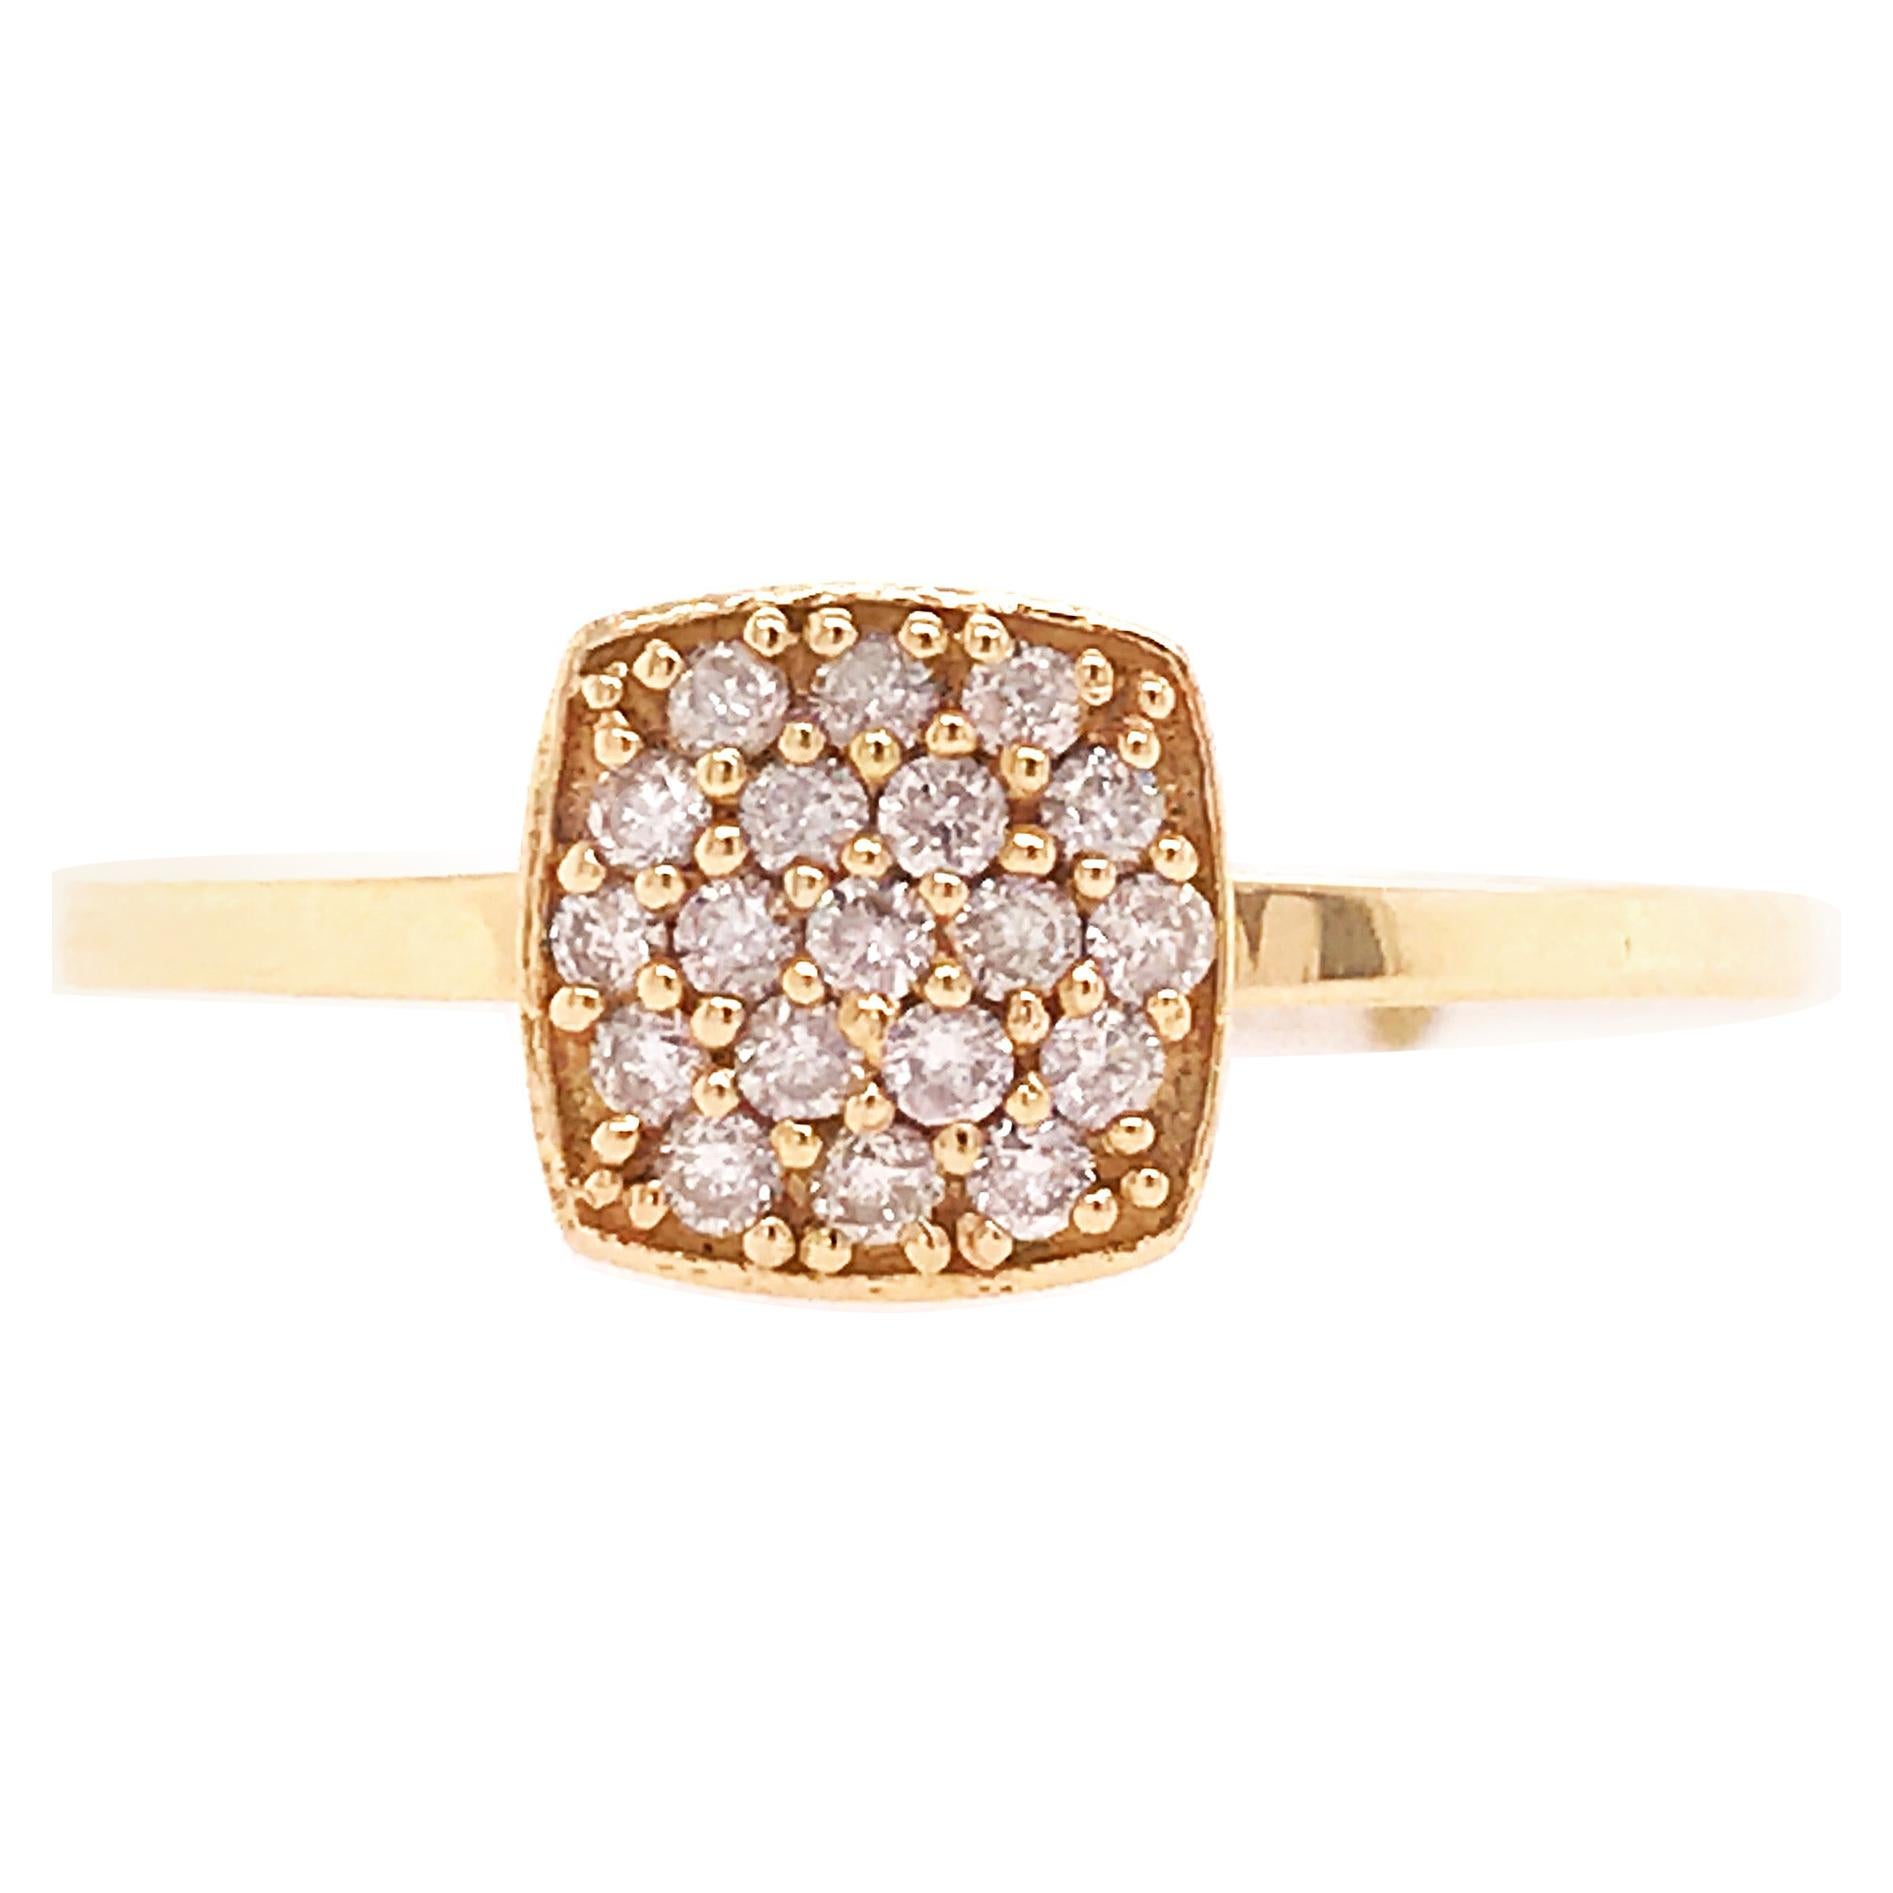 Diamond Pave Ring with .20 Carat Diamond Weight in 14 Karat Yellow Gold, Cushion